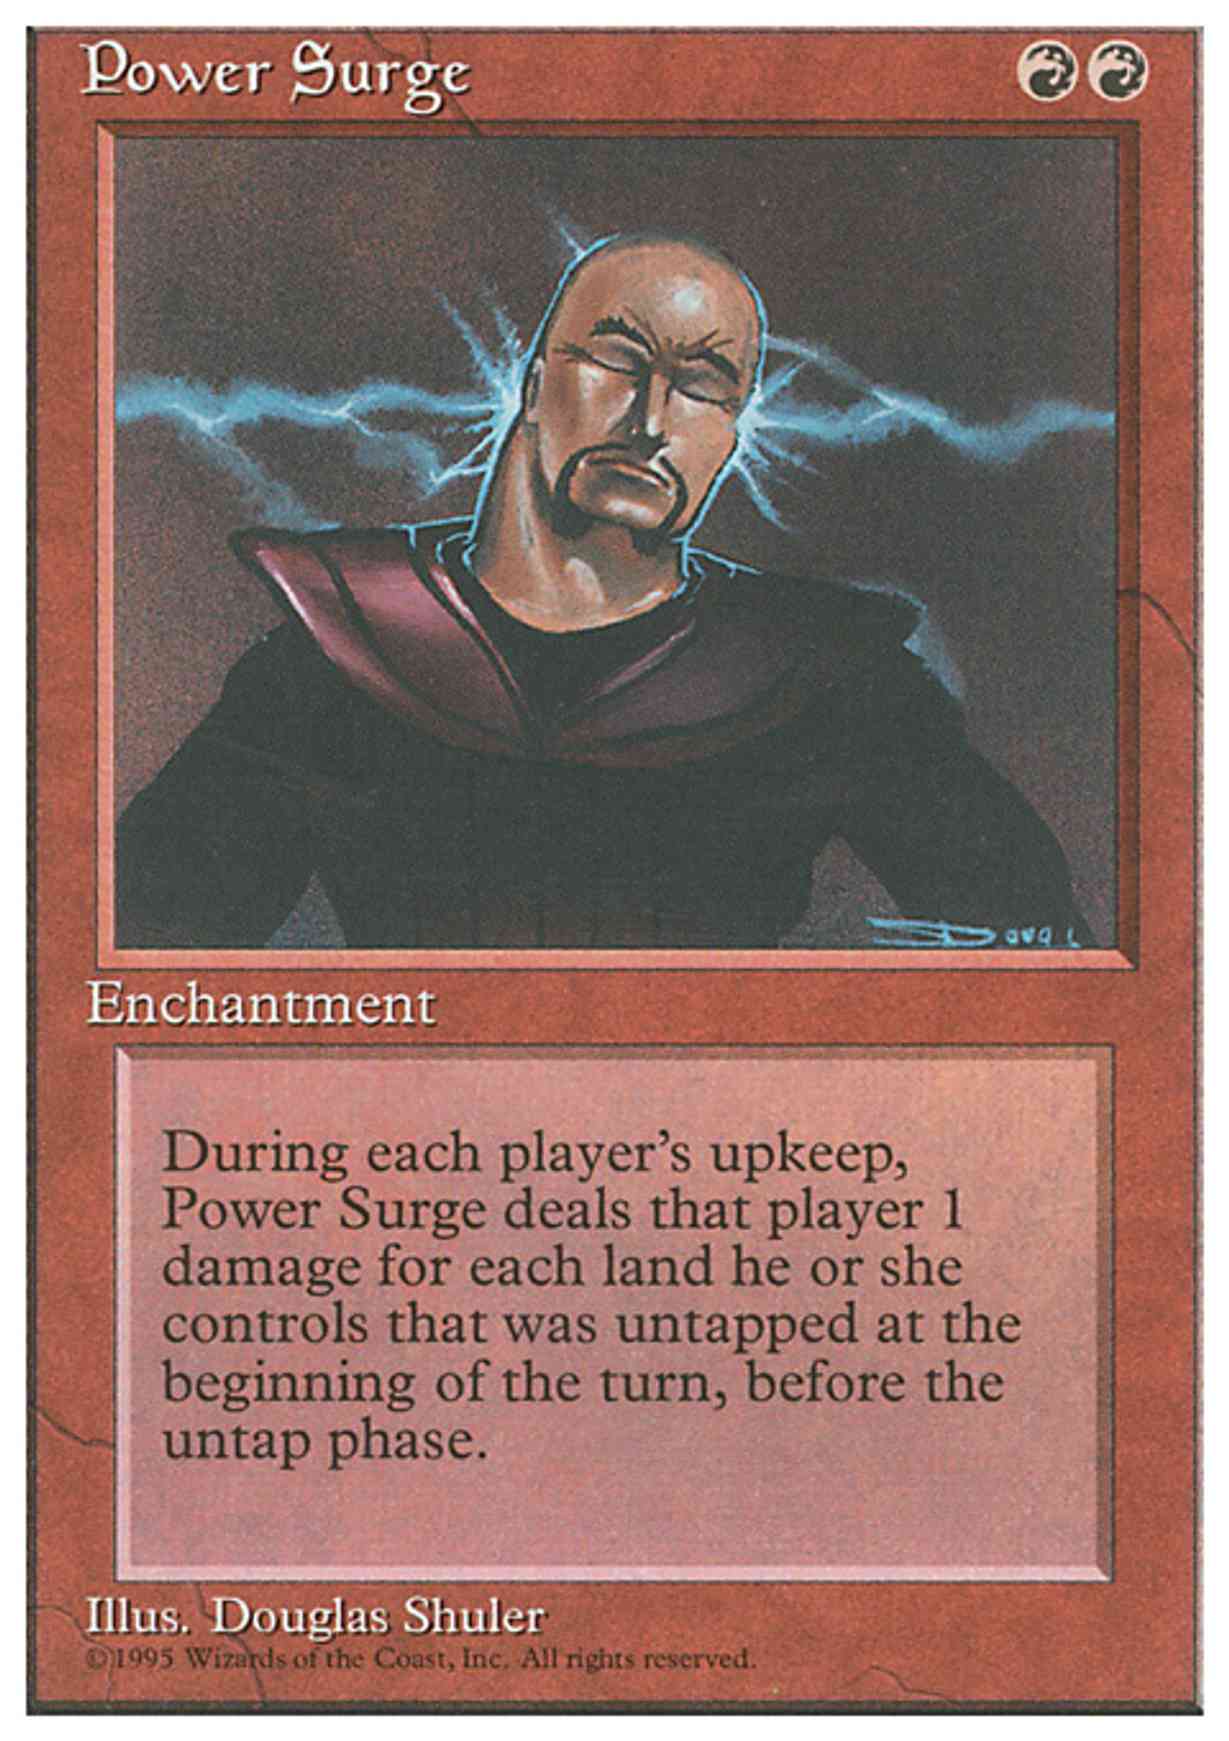 Power Surge magic card front